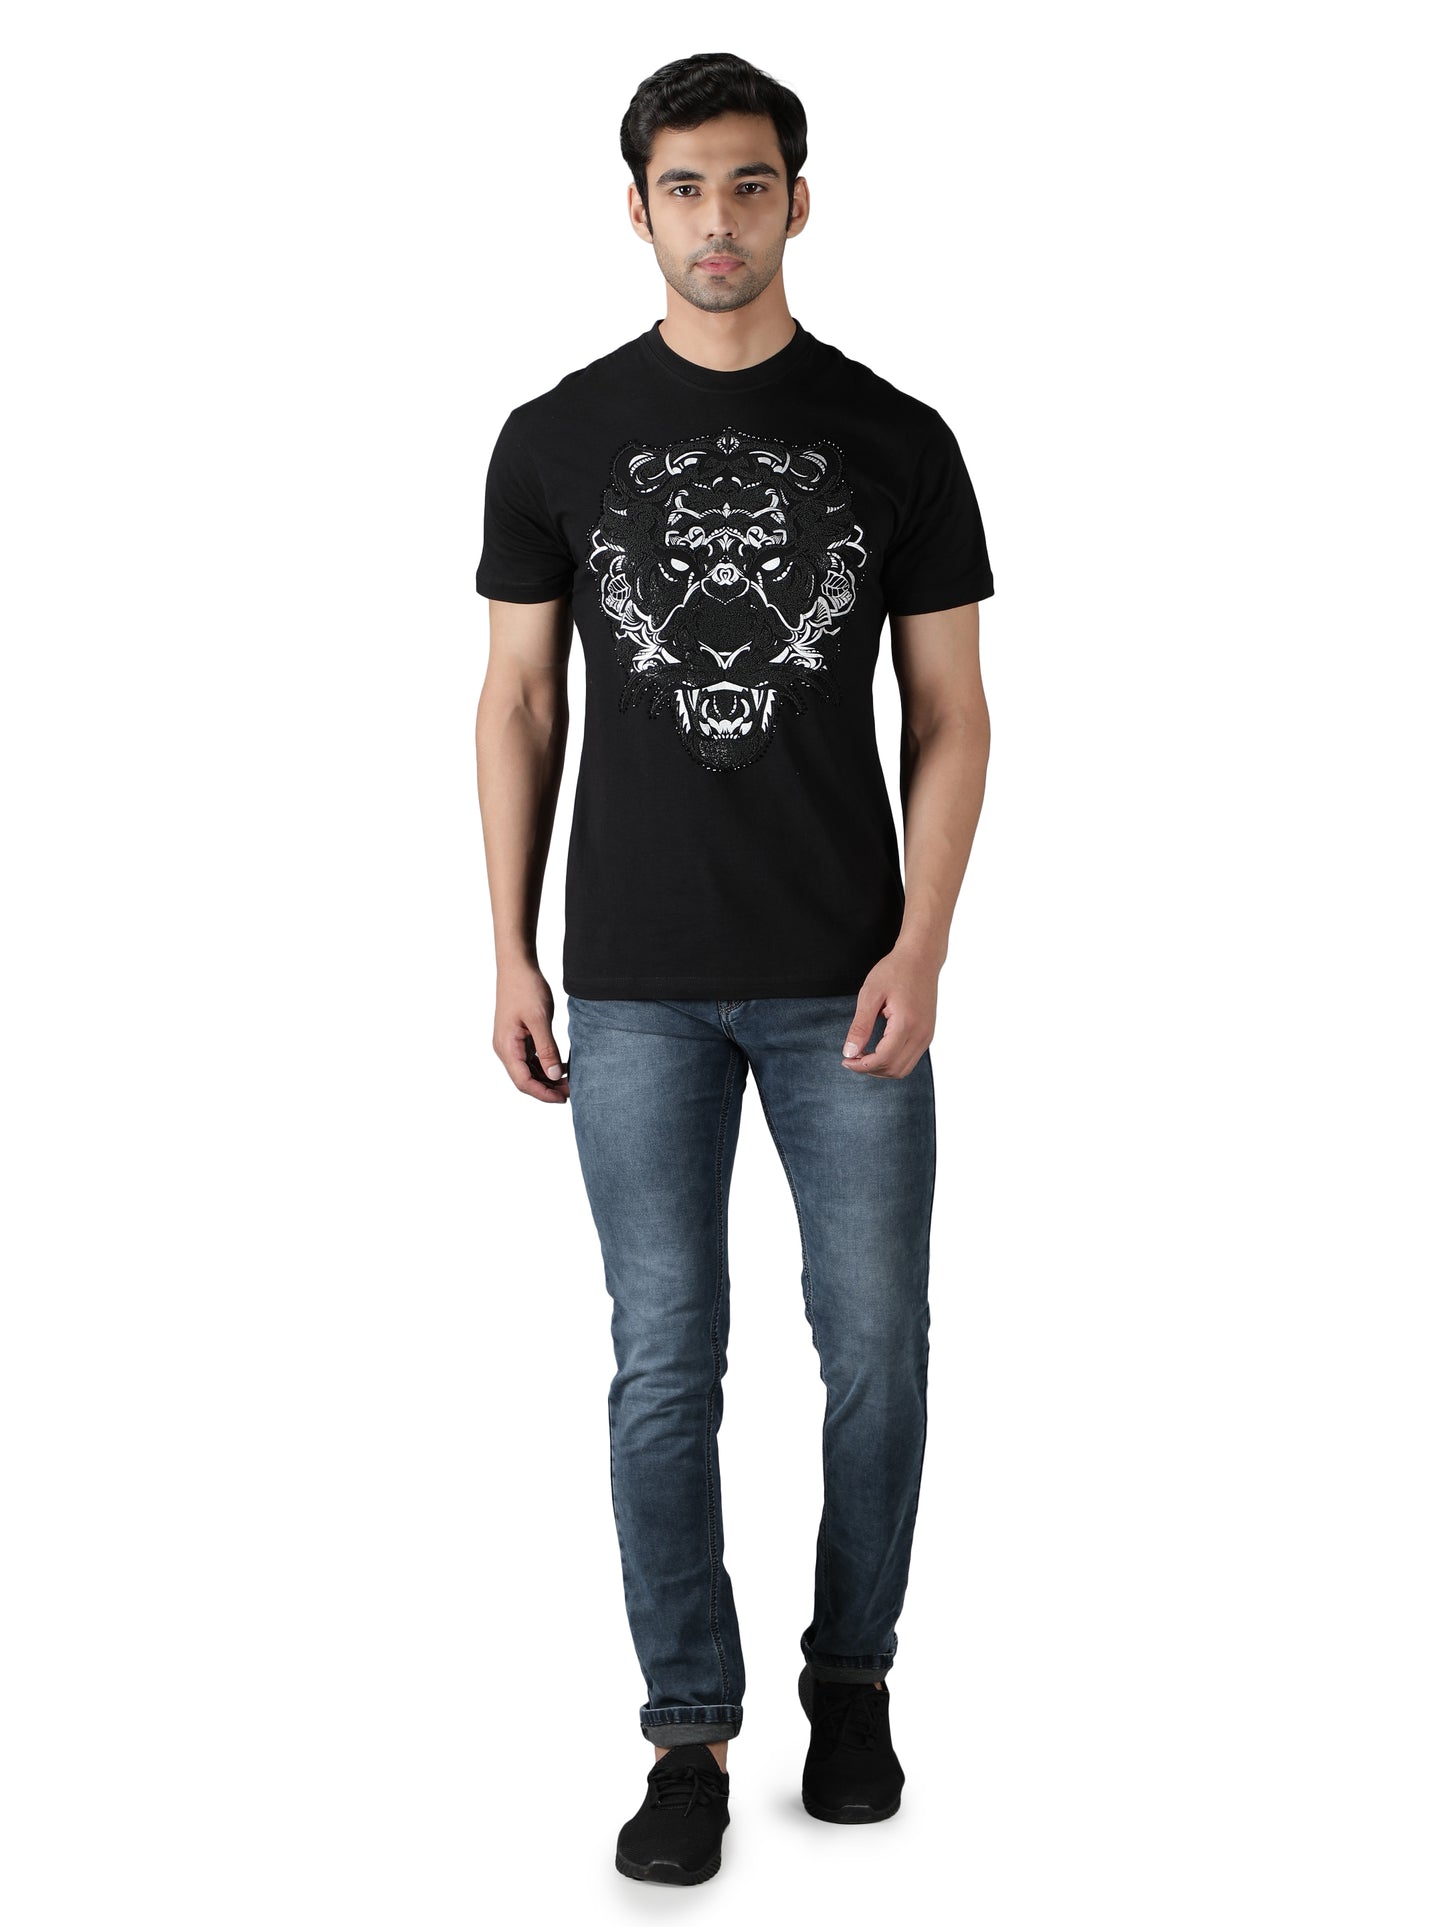 NUEVOSPORTA Men's Cotton Graphic Printed Black T-Shirt